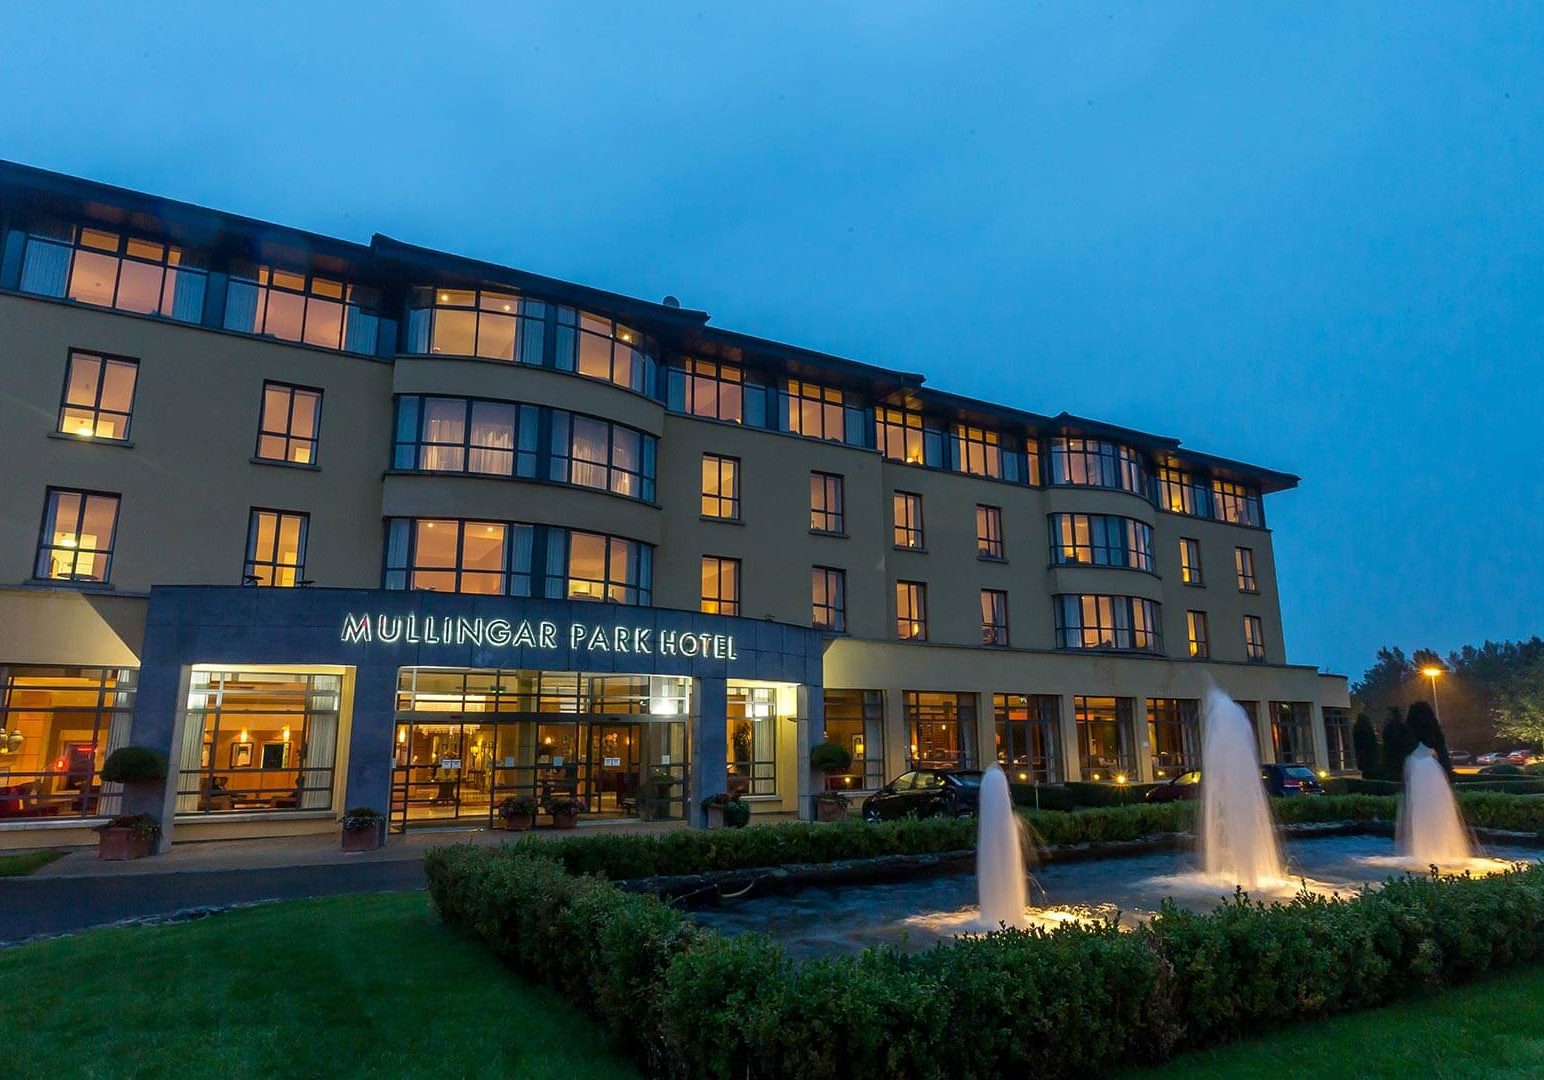 Mullingar Park Hotel | 4* Hotel in Westmeath | Book Best Rates Online!1544 x 1080